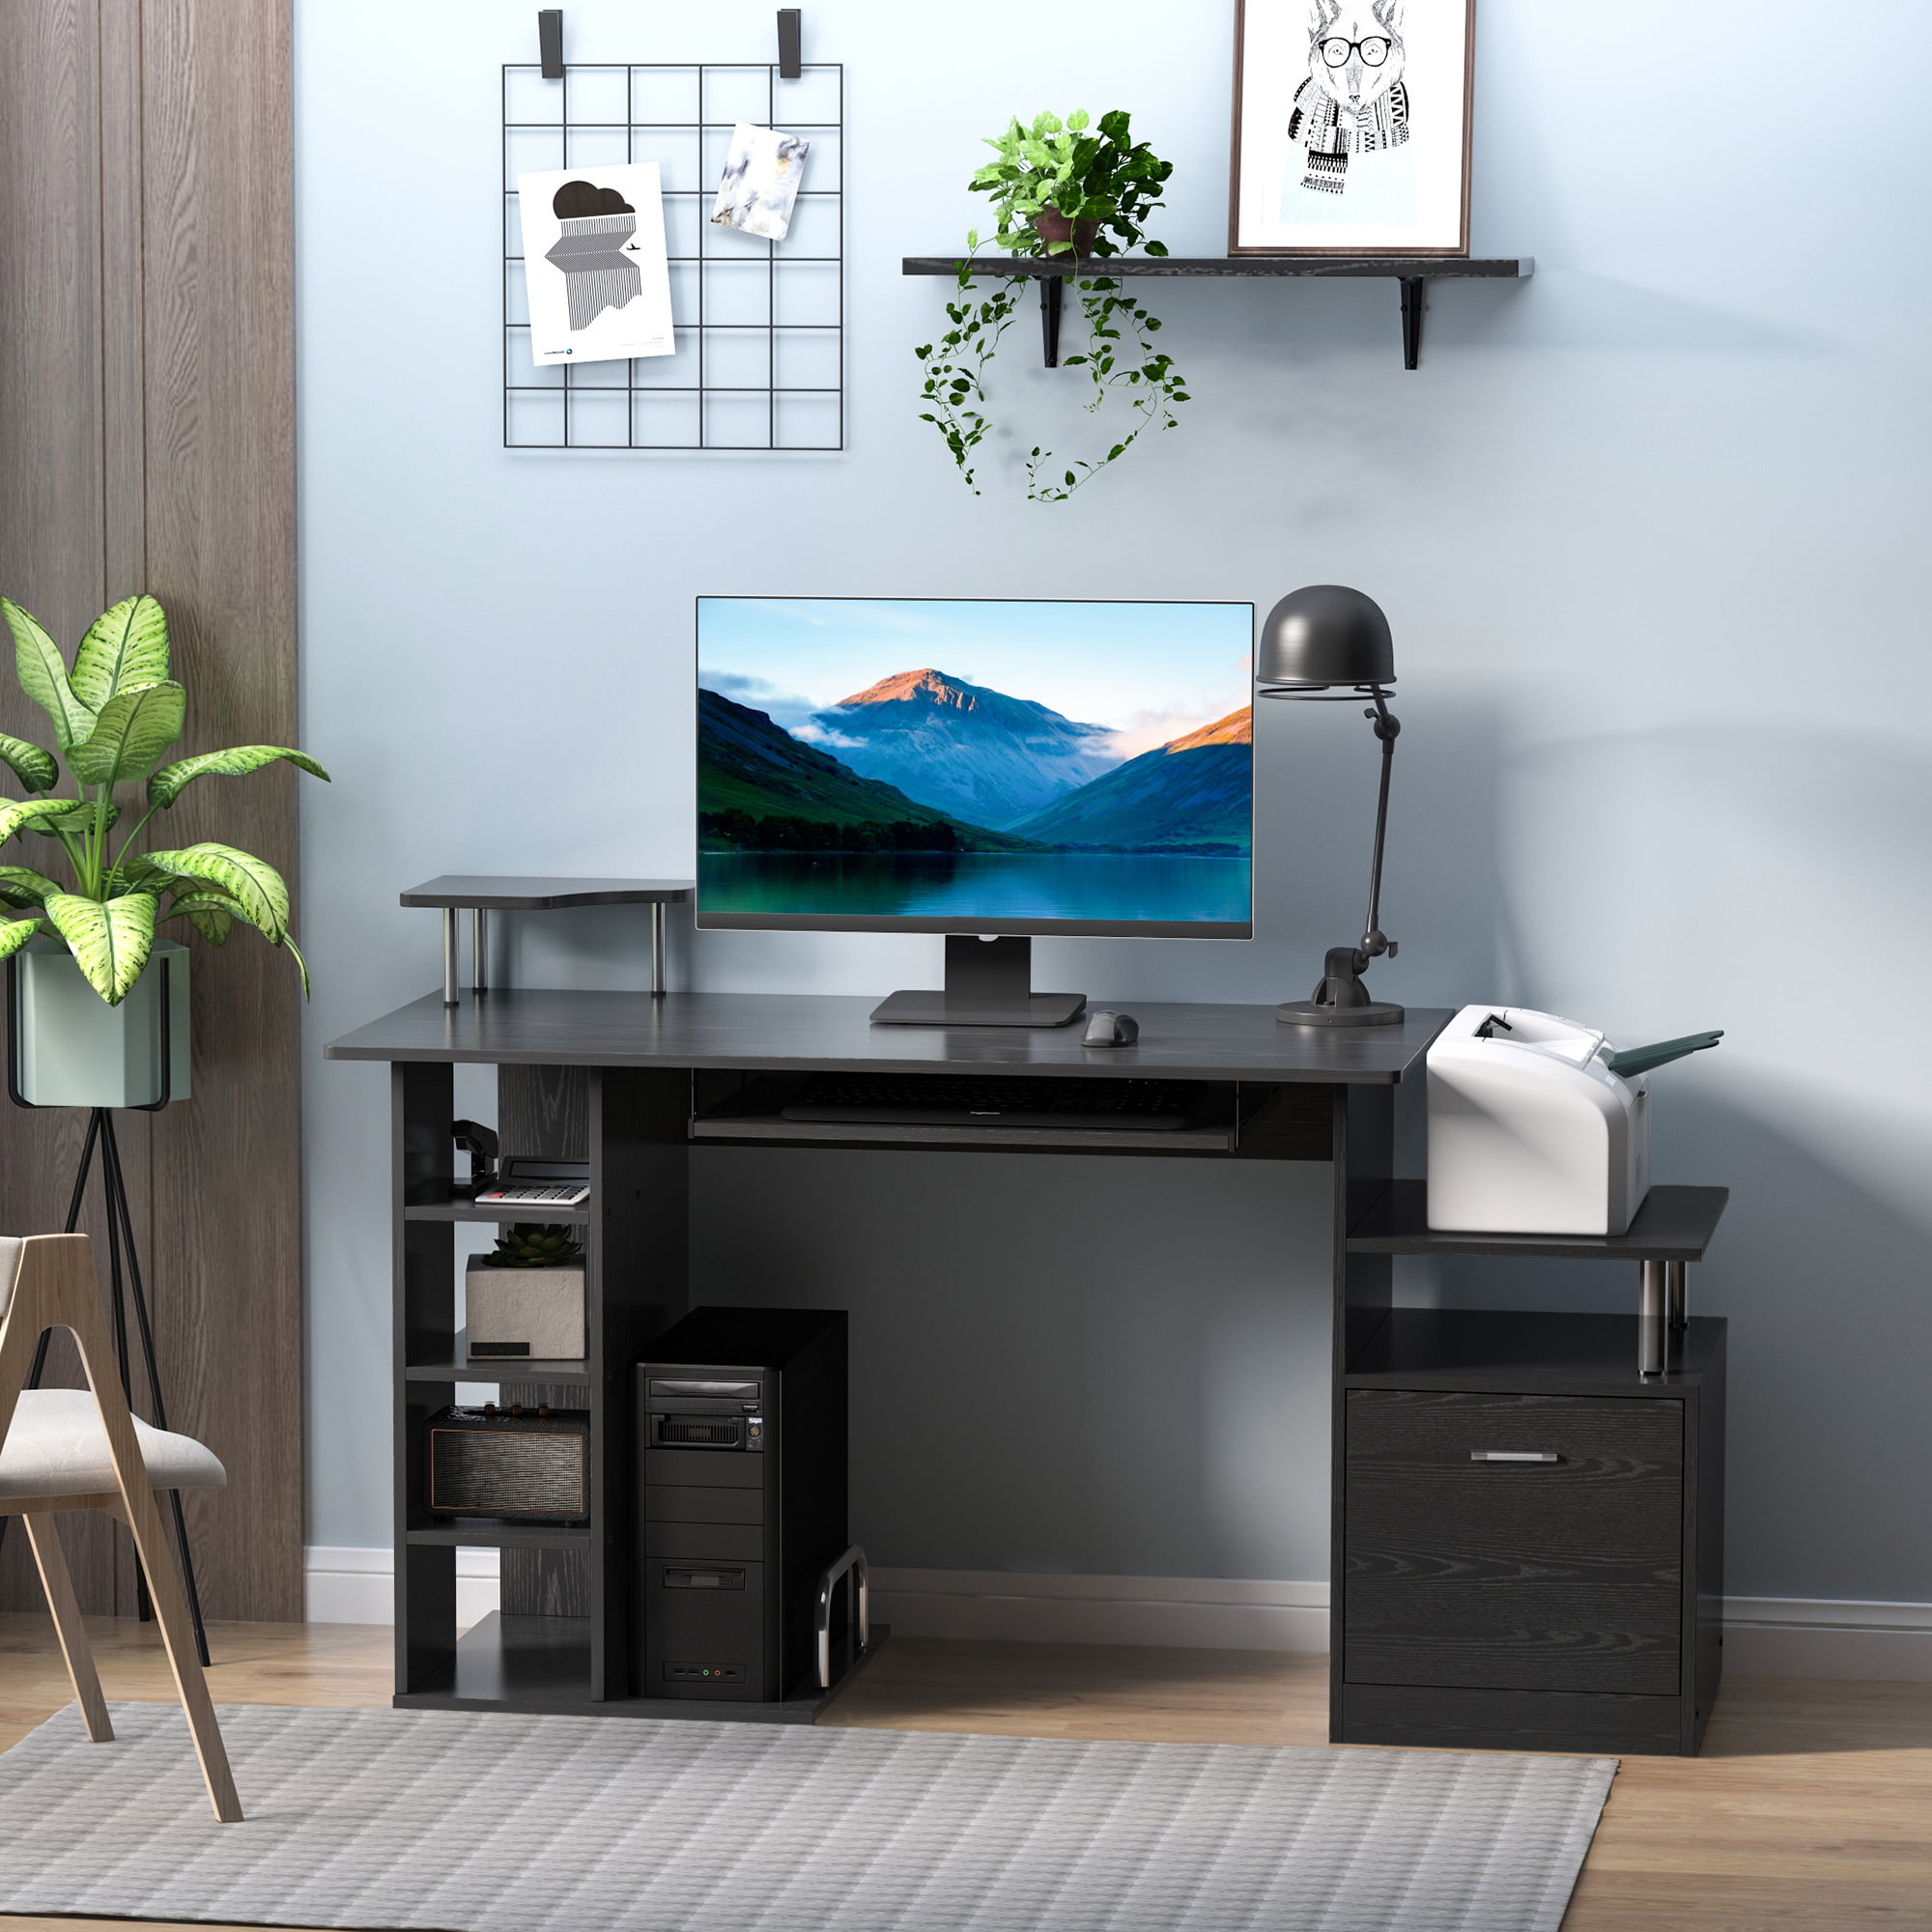 Black Wood Effect Computer Desk with Shelves and Storage Bin 